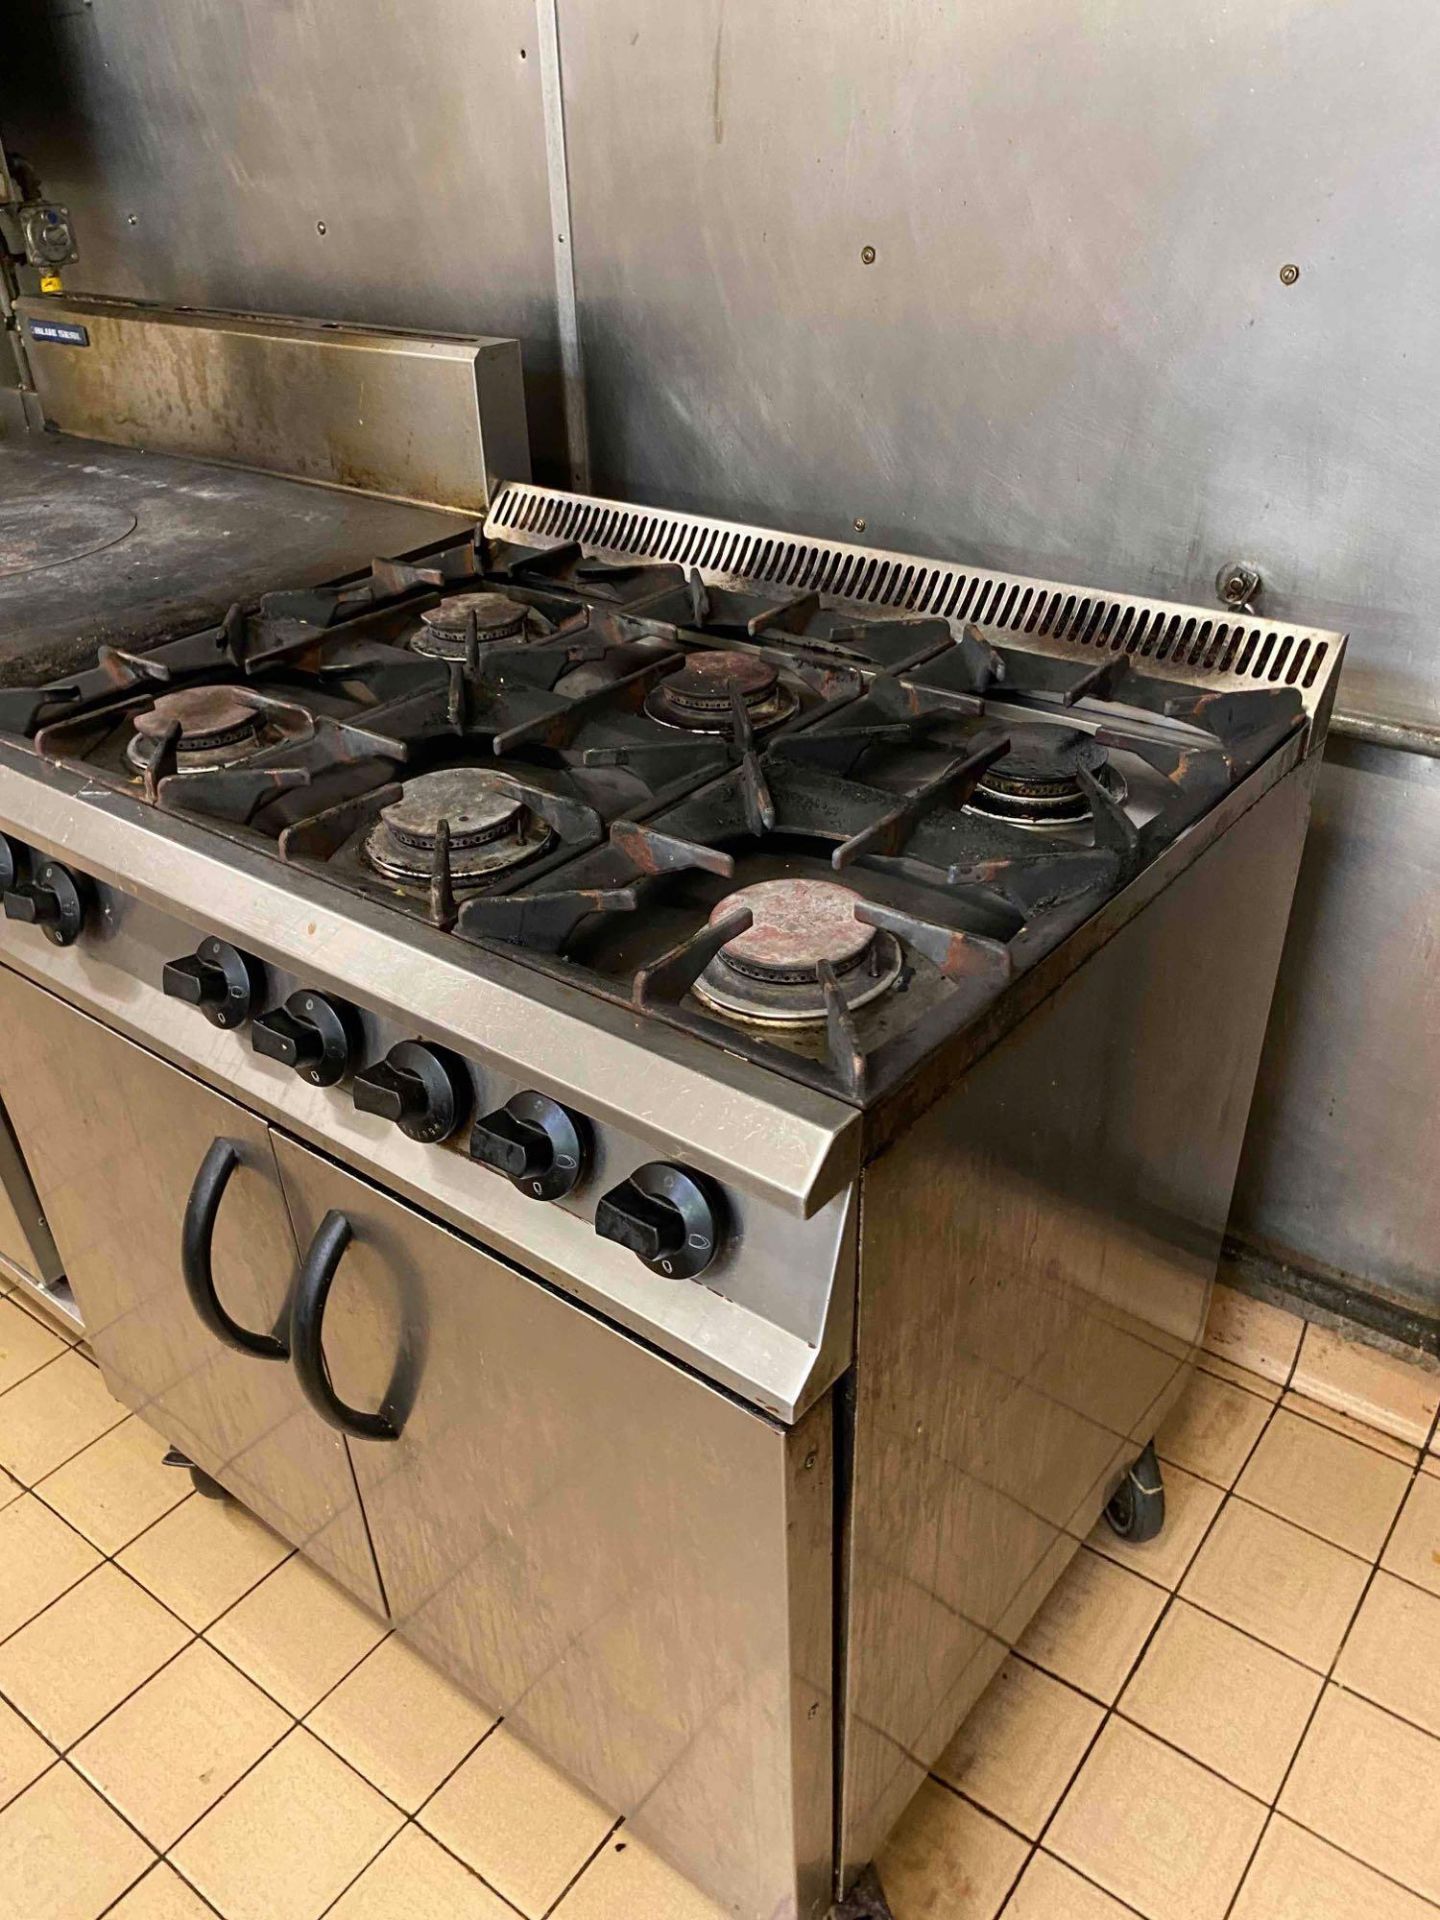 Marwood Vulcan 6 Burner Range With Oven (Kitchen) - Image 2 of 2